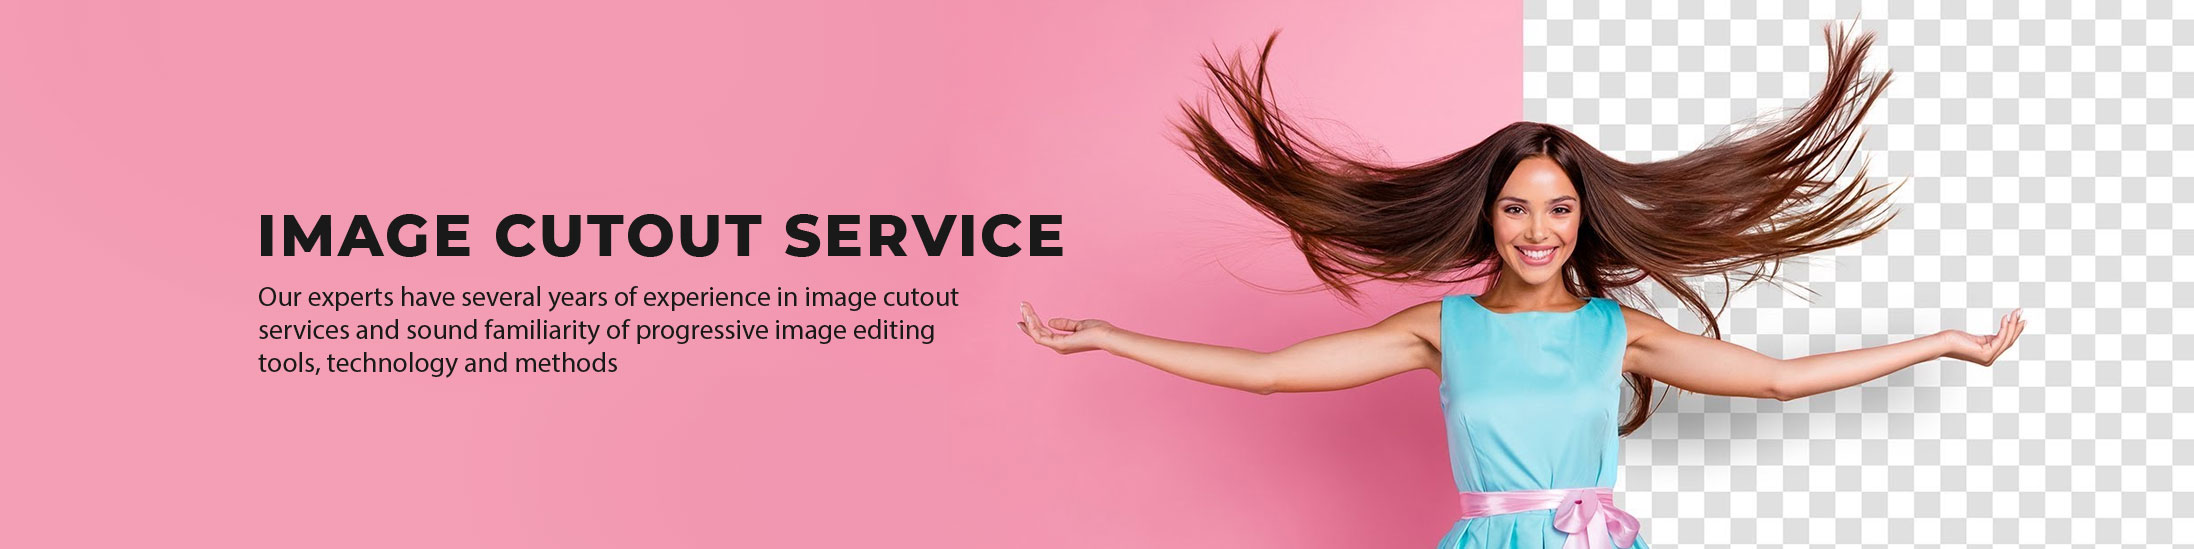 Image Cutout Service